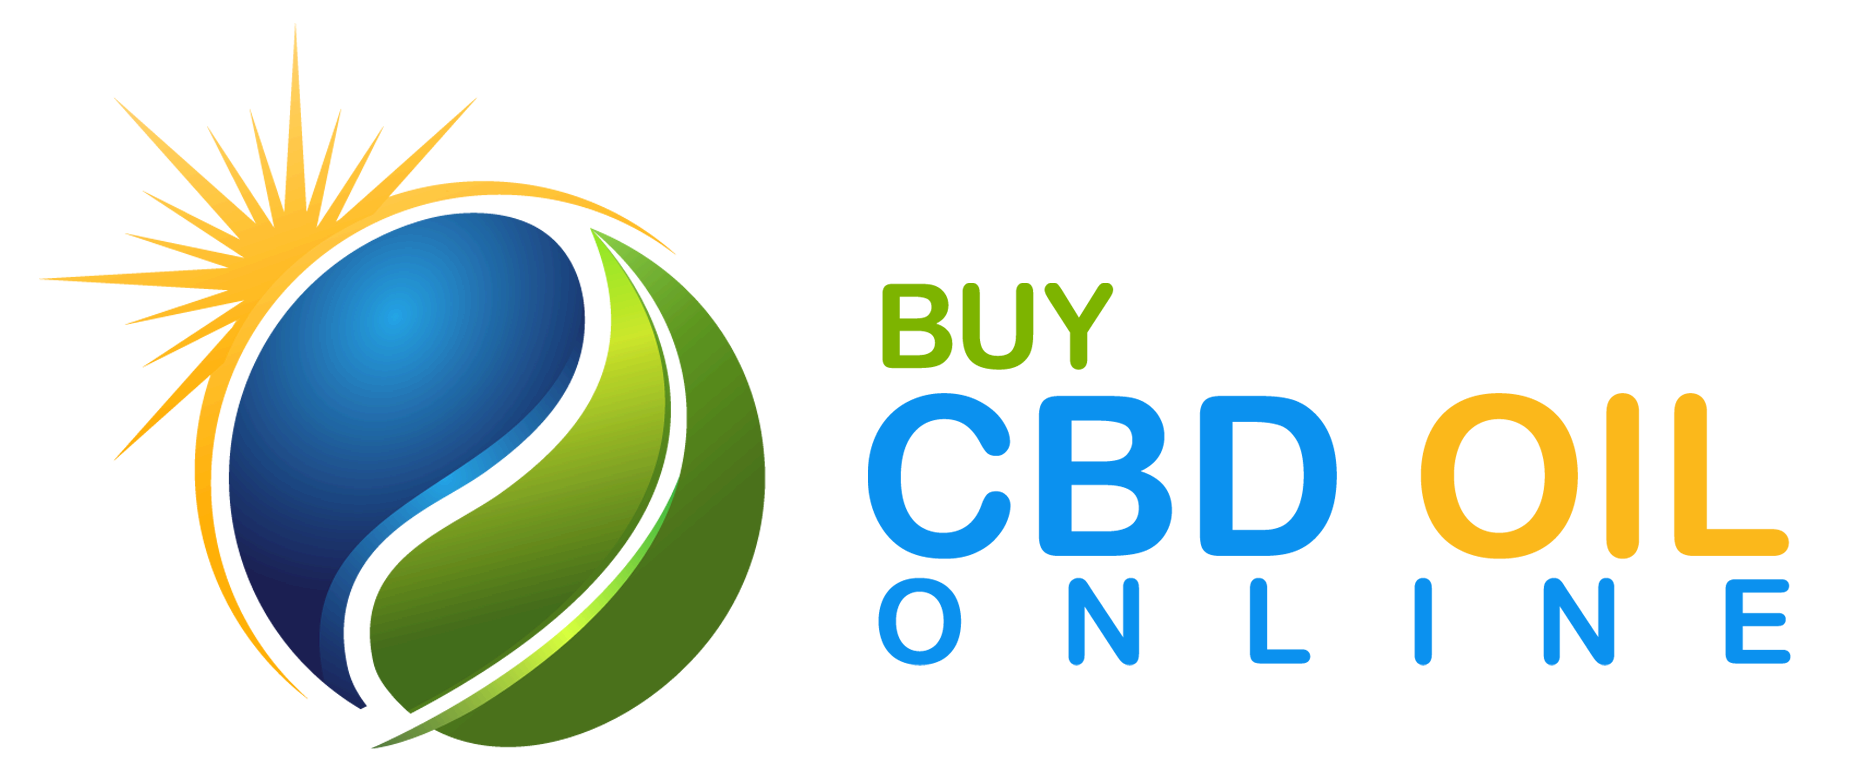 Buy CBD Oil Online Functional Remedies Full Spectrum Hemp Oil Salve 500mg